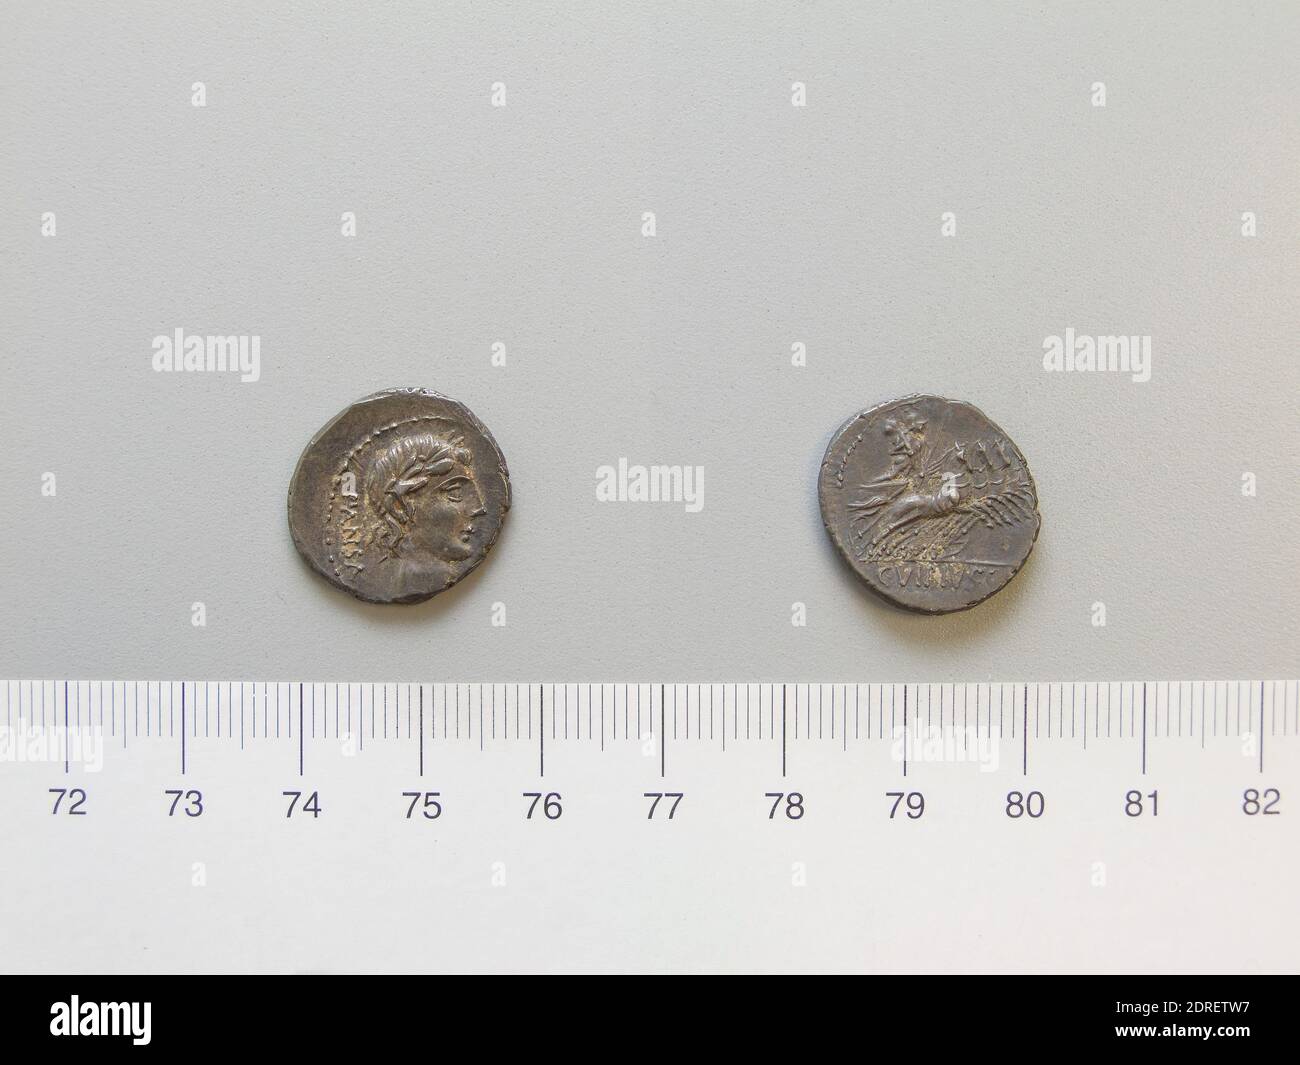 Mint: Rome, Magistrate: C. Vibius Pansa, Denarius from Rome, 90 B.C., Silver, 3.81 g, 6:00, 18.8 mm, Made in Rome, Italy, Roman, 1st century B.C., Numismatics Stock Photo